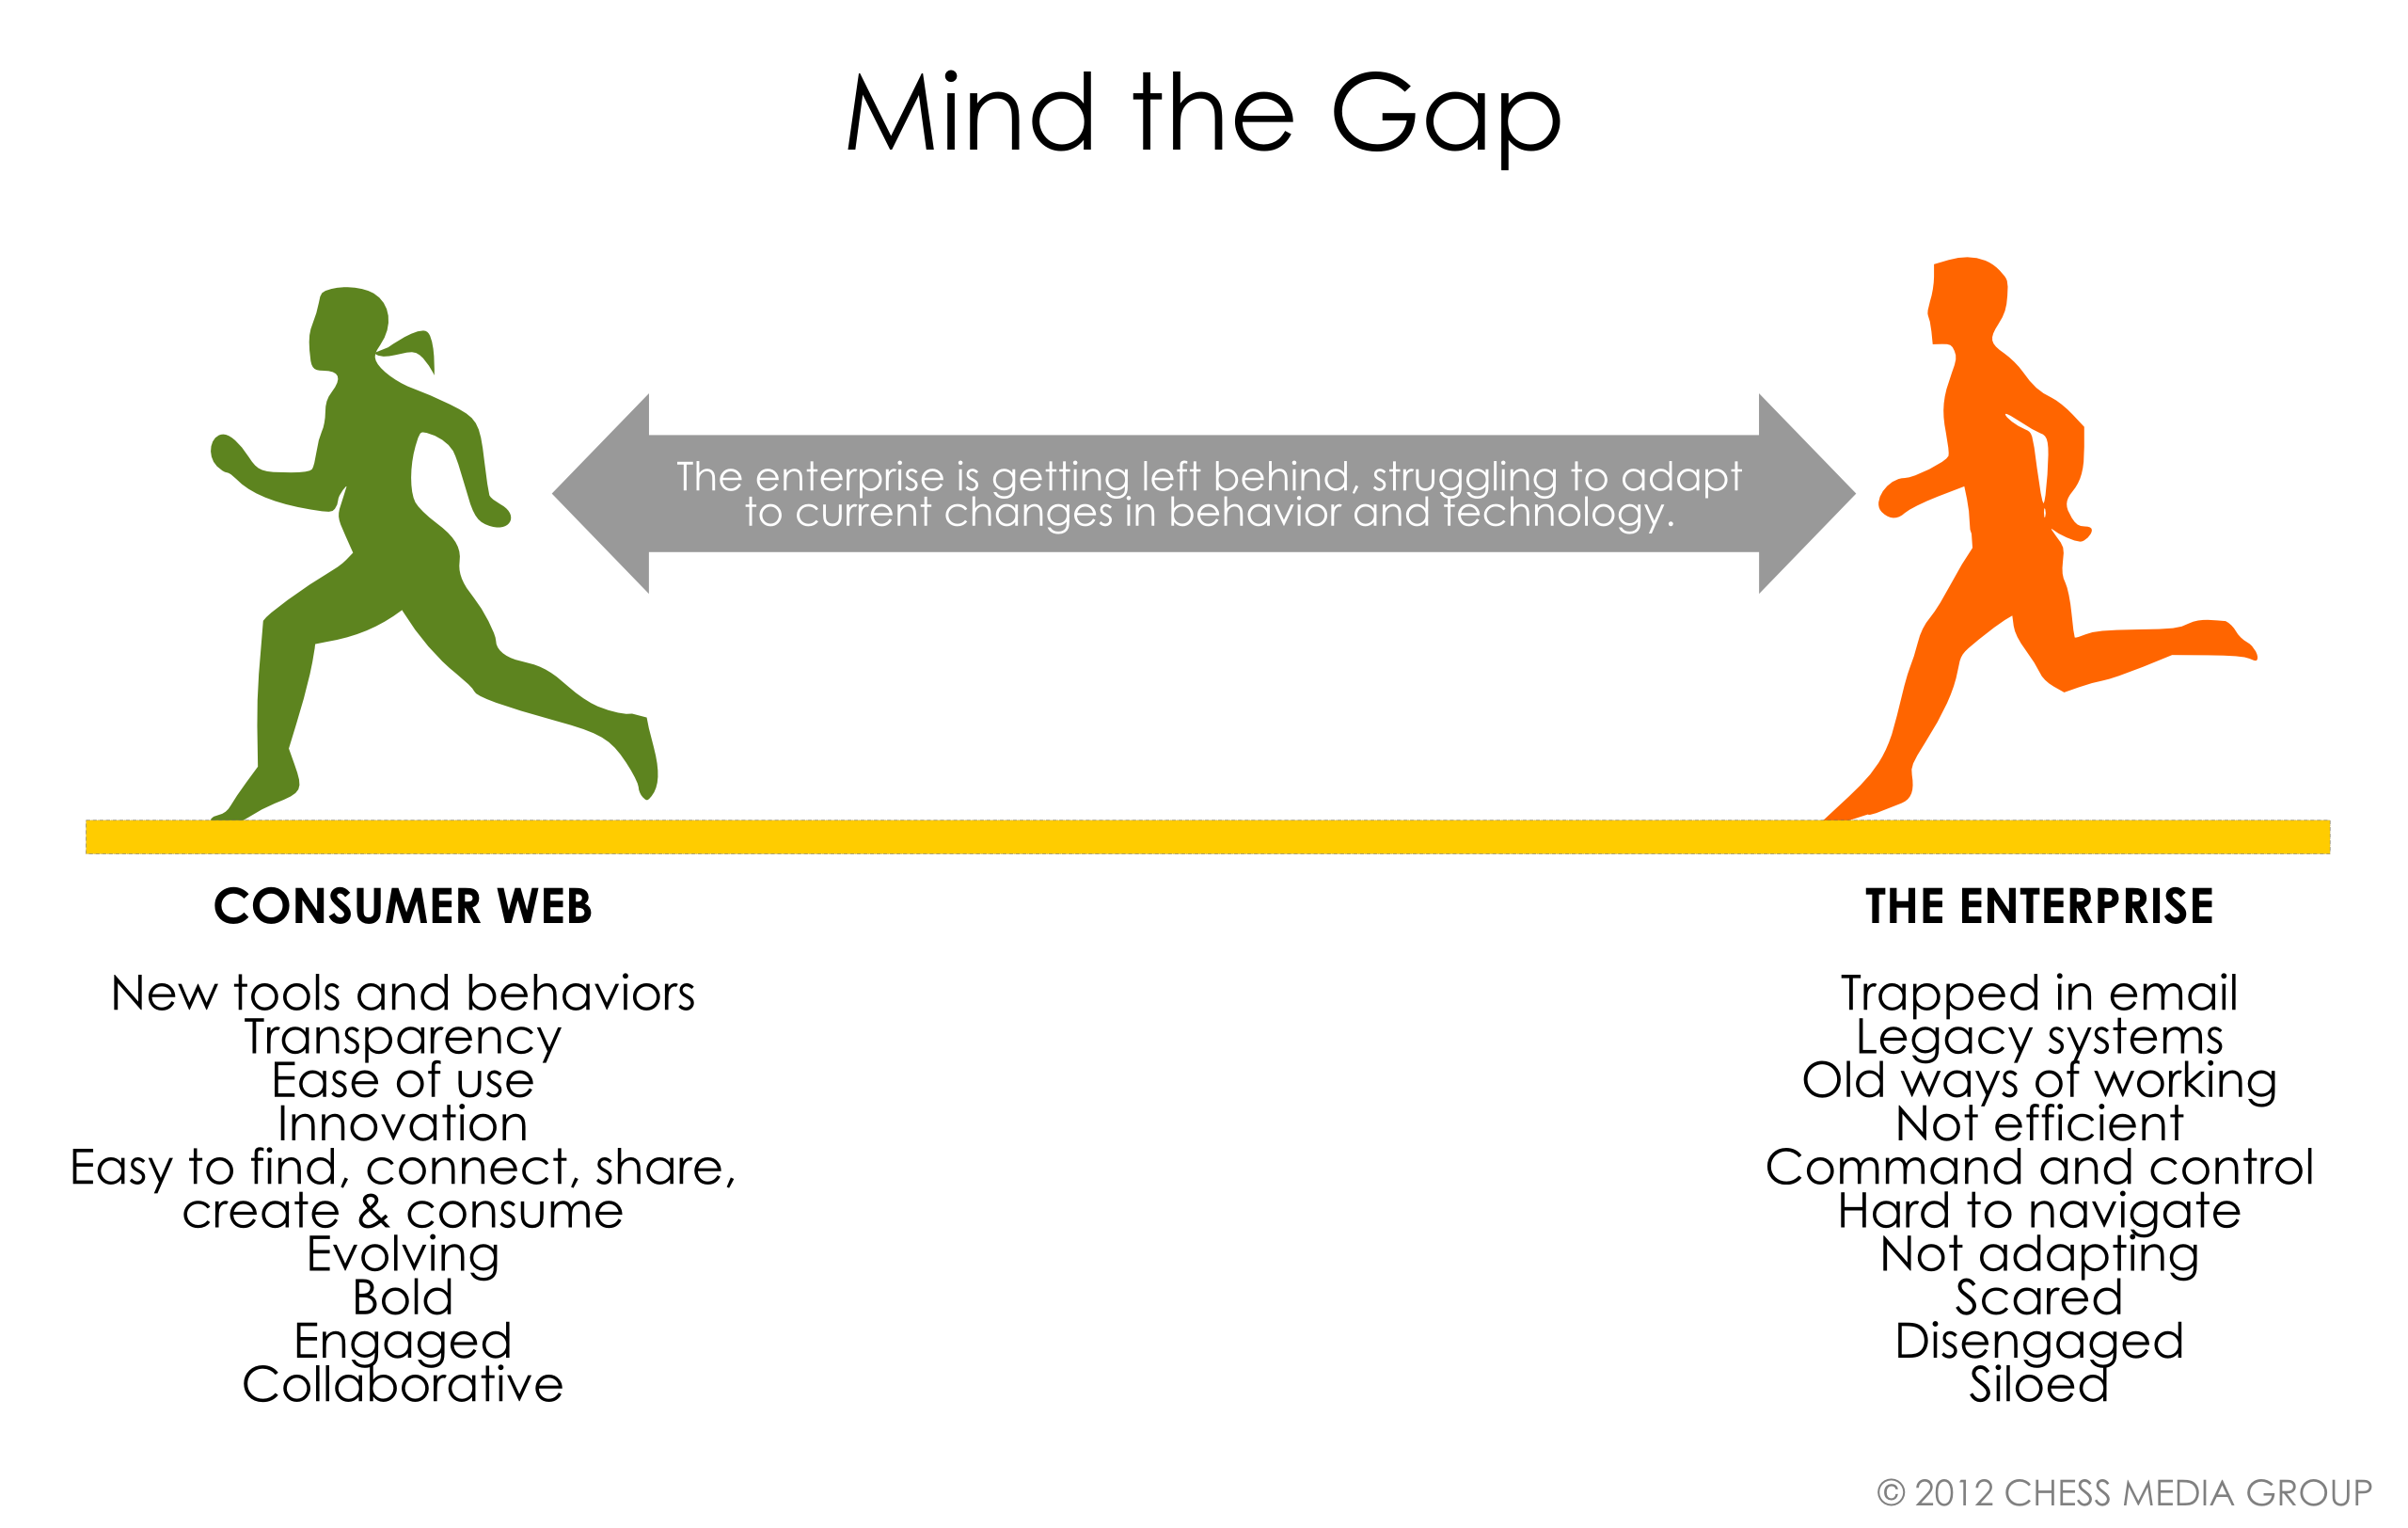 Mind the gap